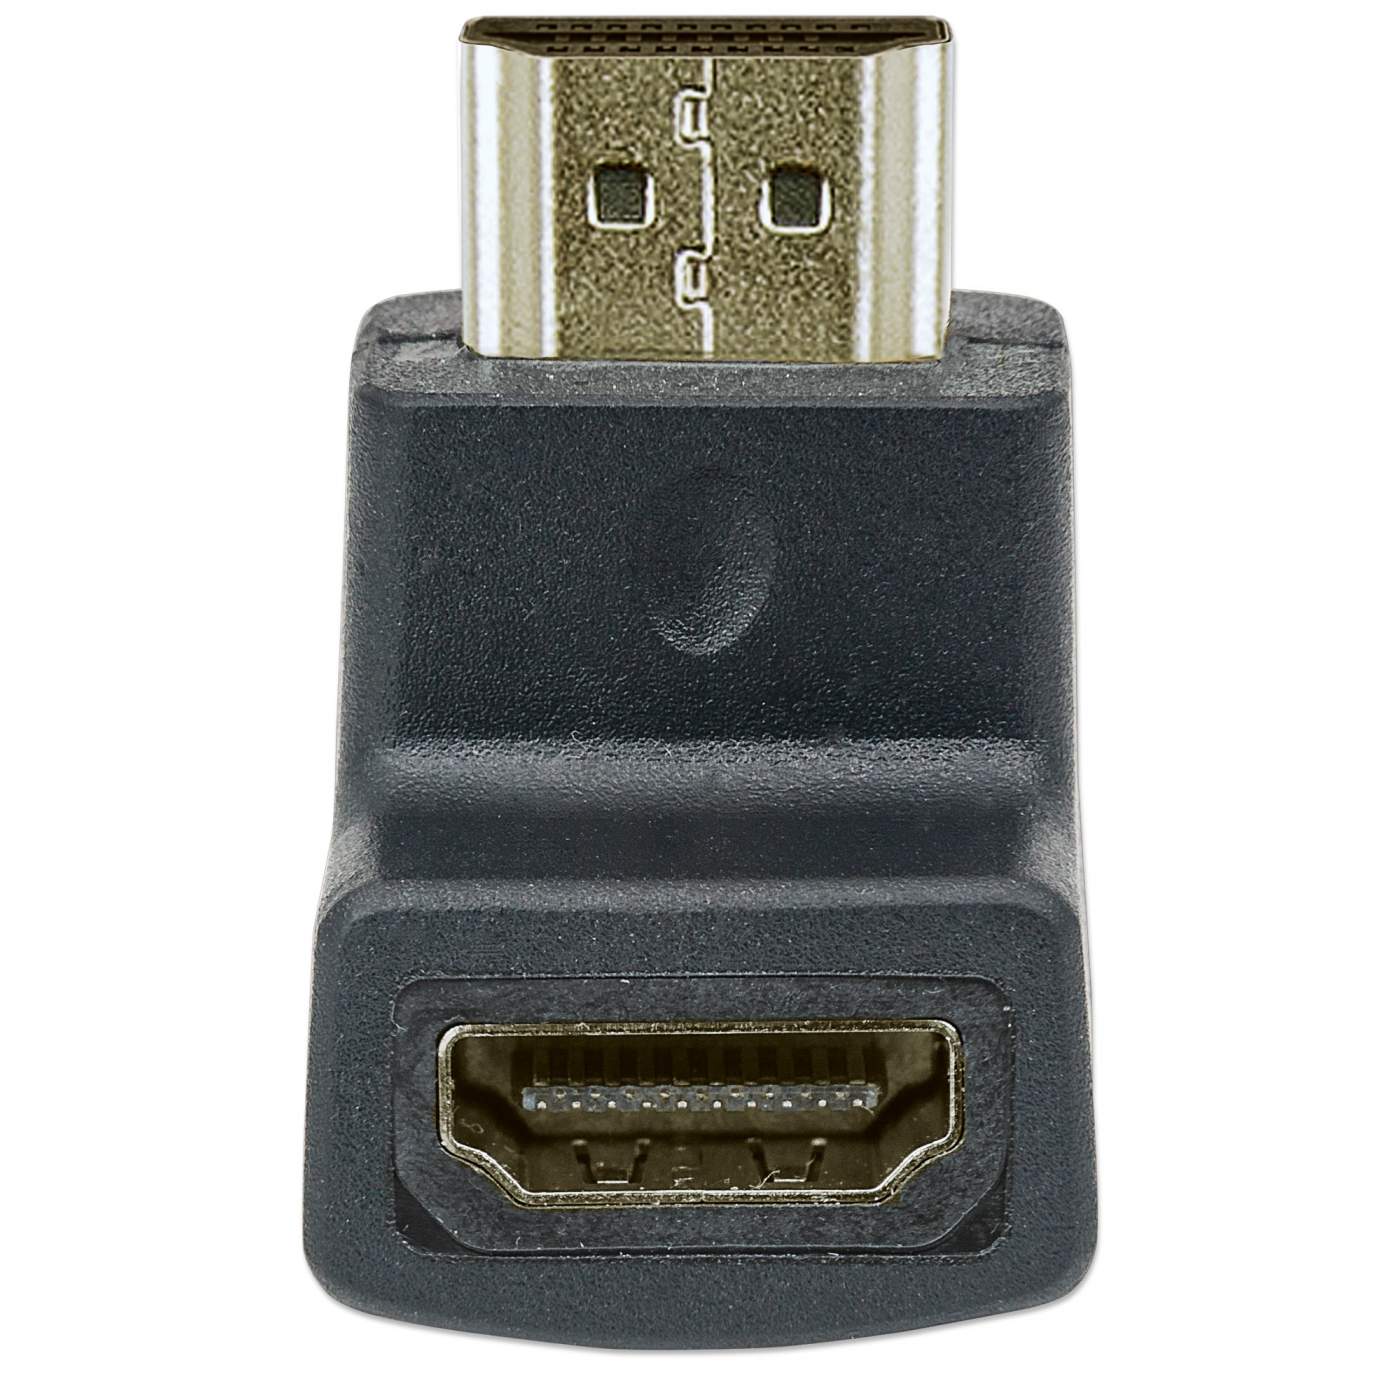 HDMI Adapter Image 7